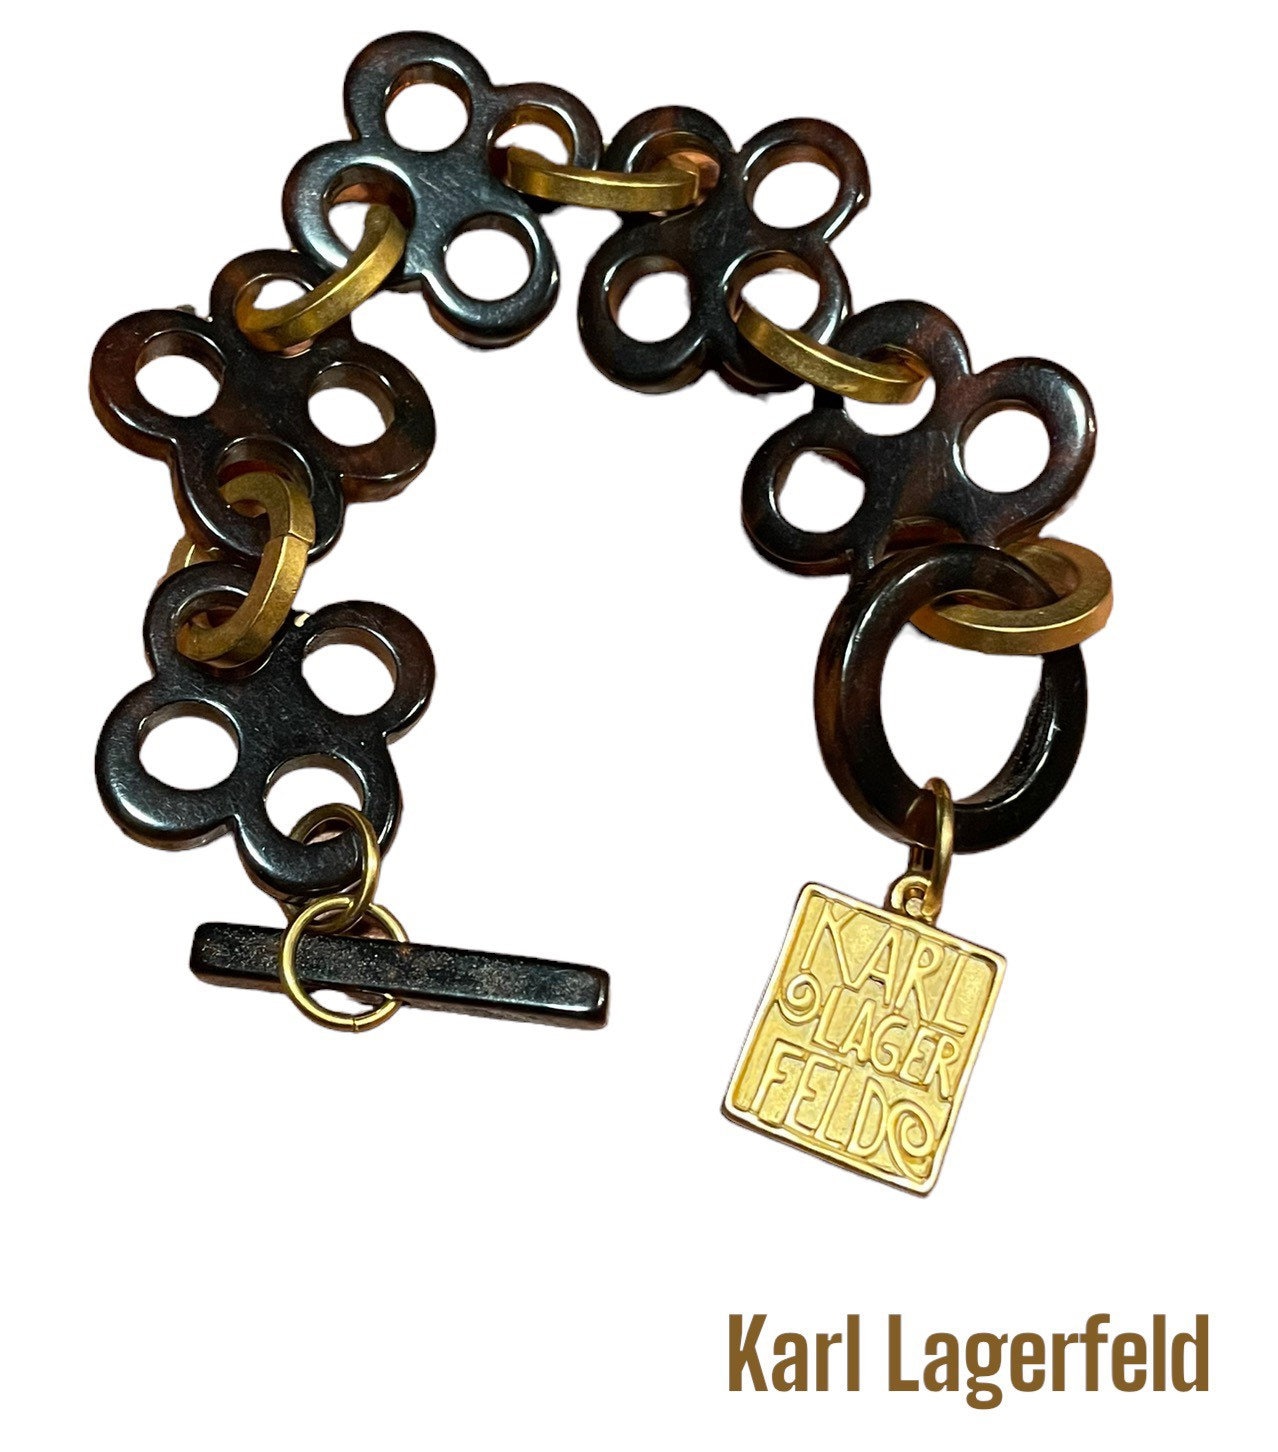 KARL LAGERFELD K/MONOGRAM CHAIN PAVE BRACELET, Silver Women's Bracelet